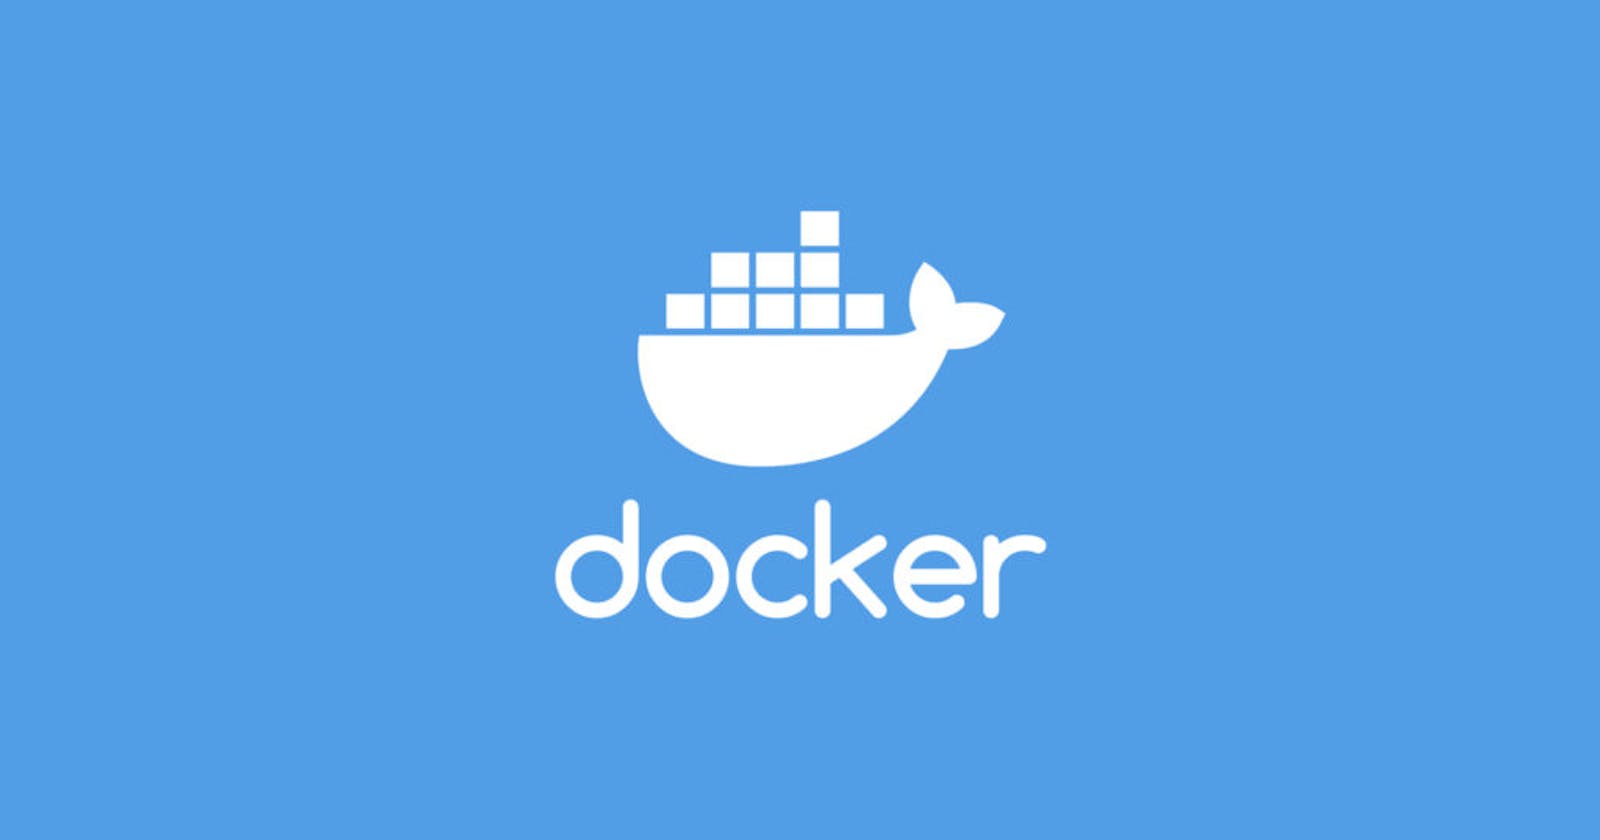 Launching GUI Applications in Docker